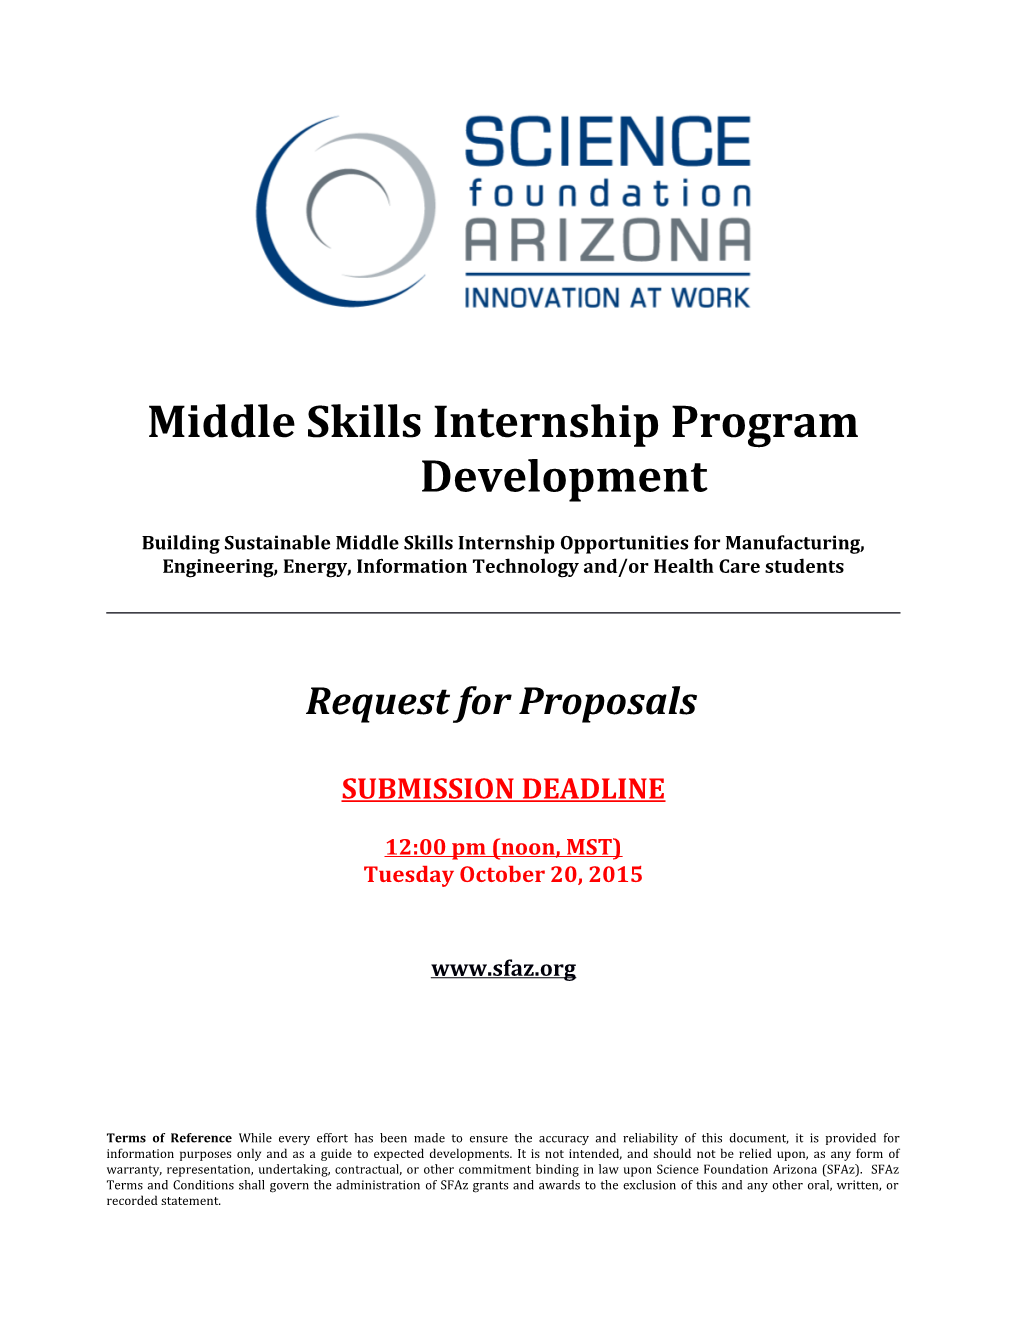 Middle Skills Internship Program Development